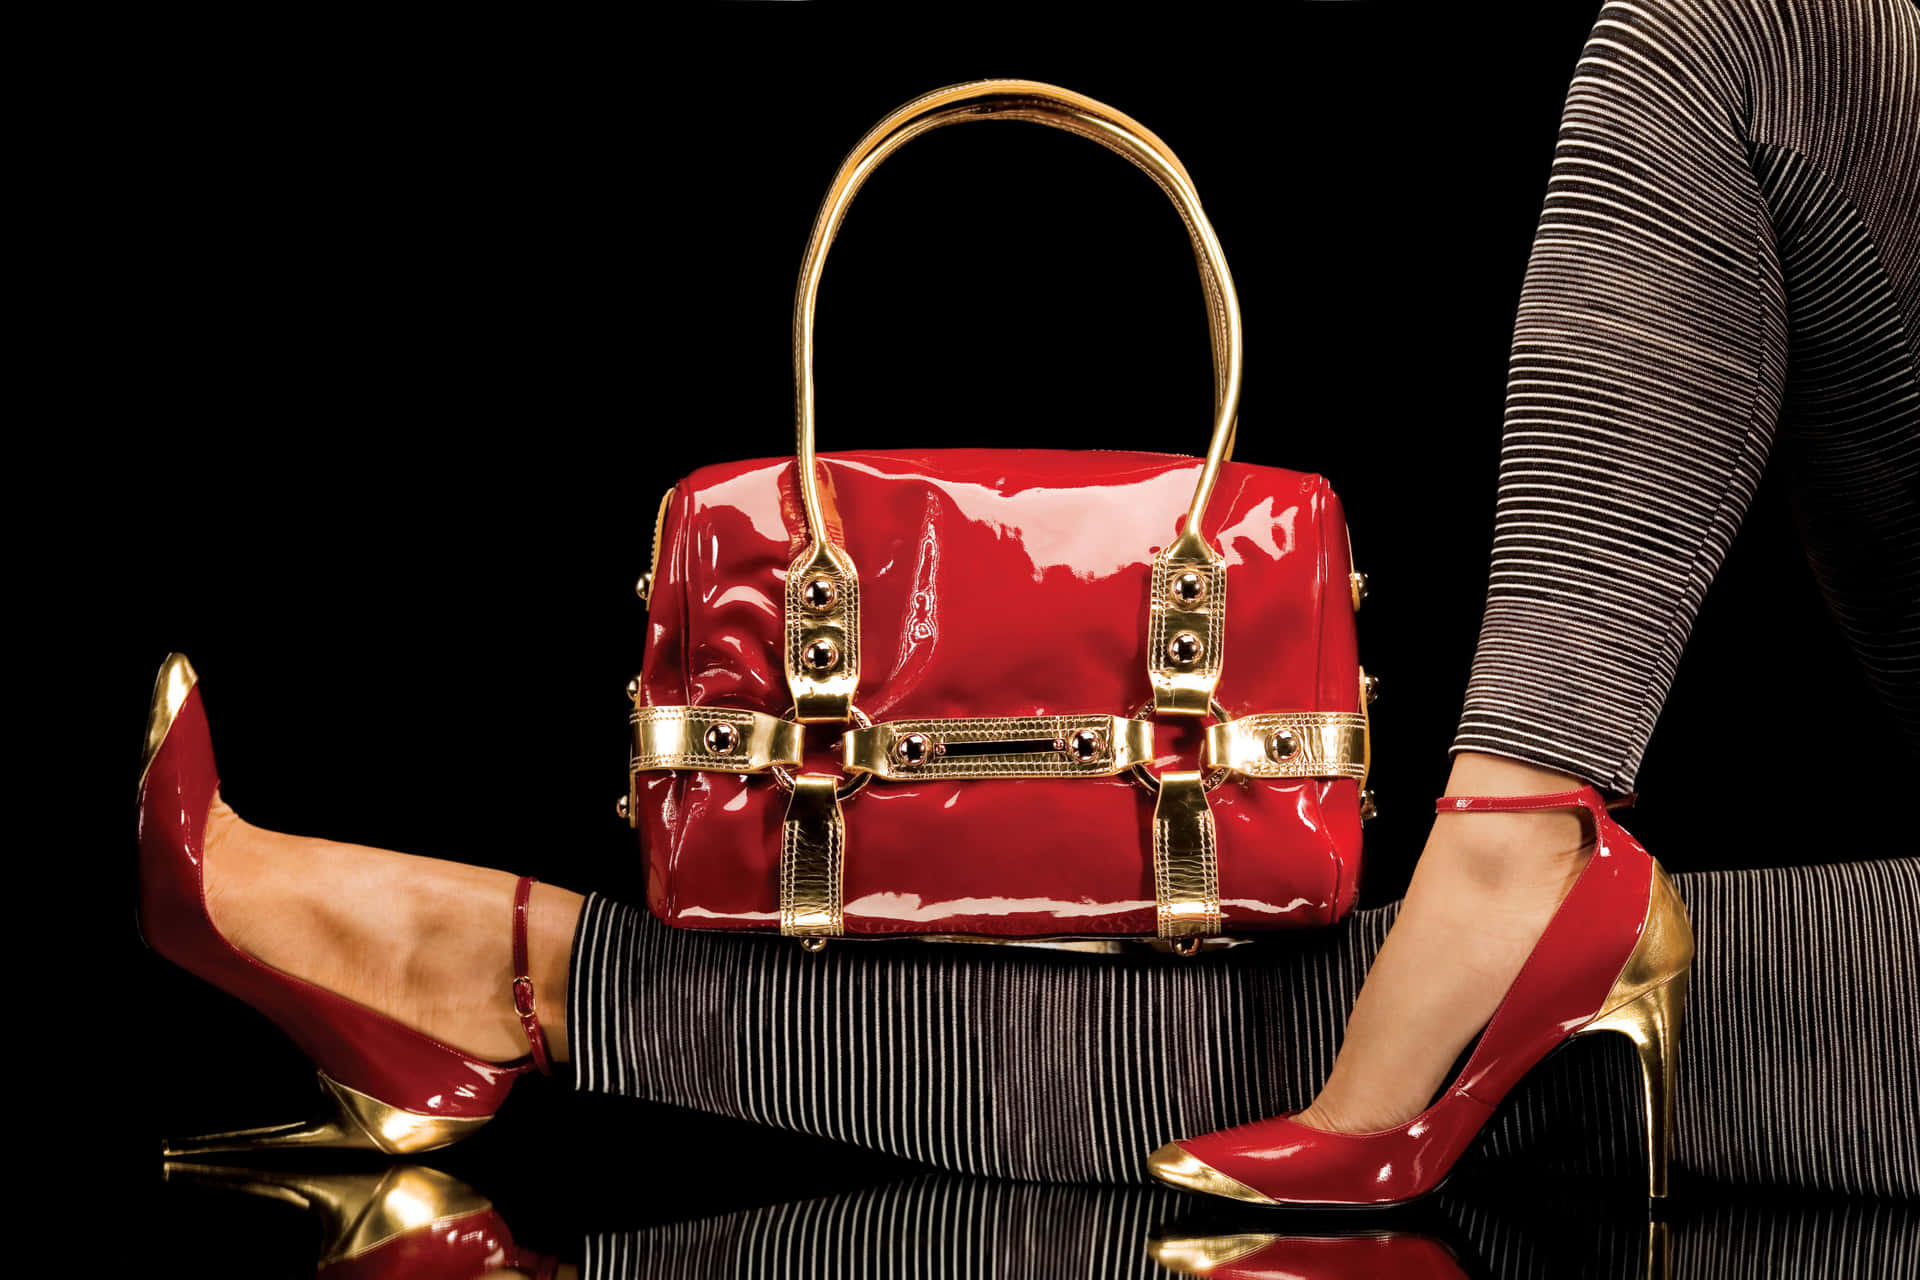 Red Heelsand Handbag Fashion Shoot Background